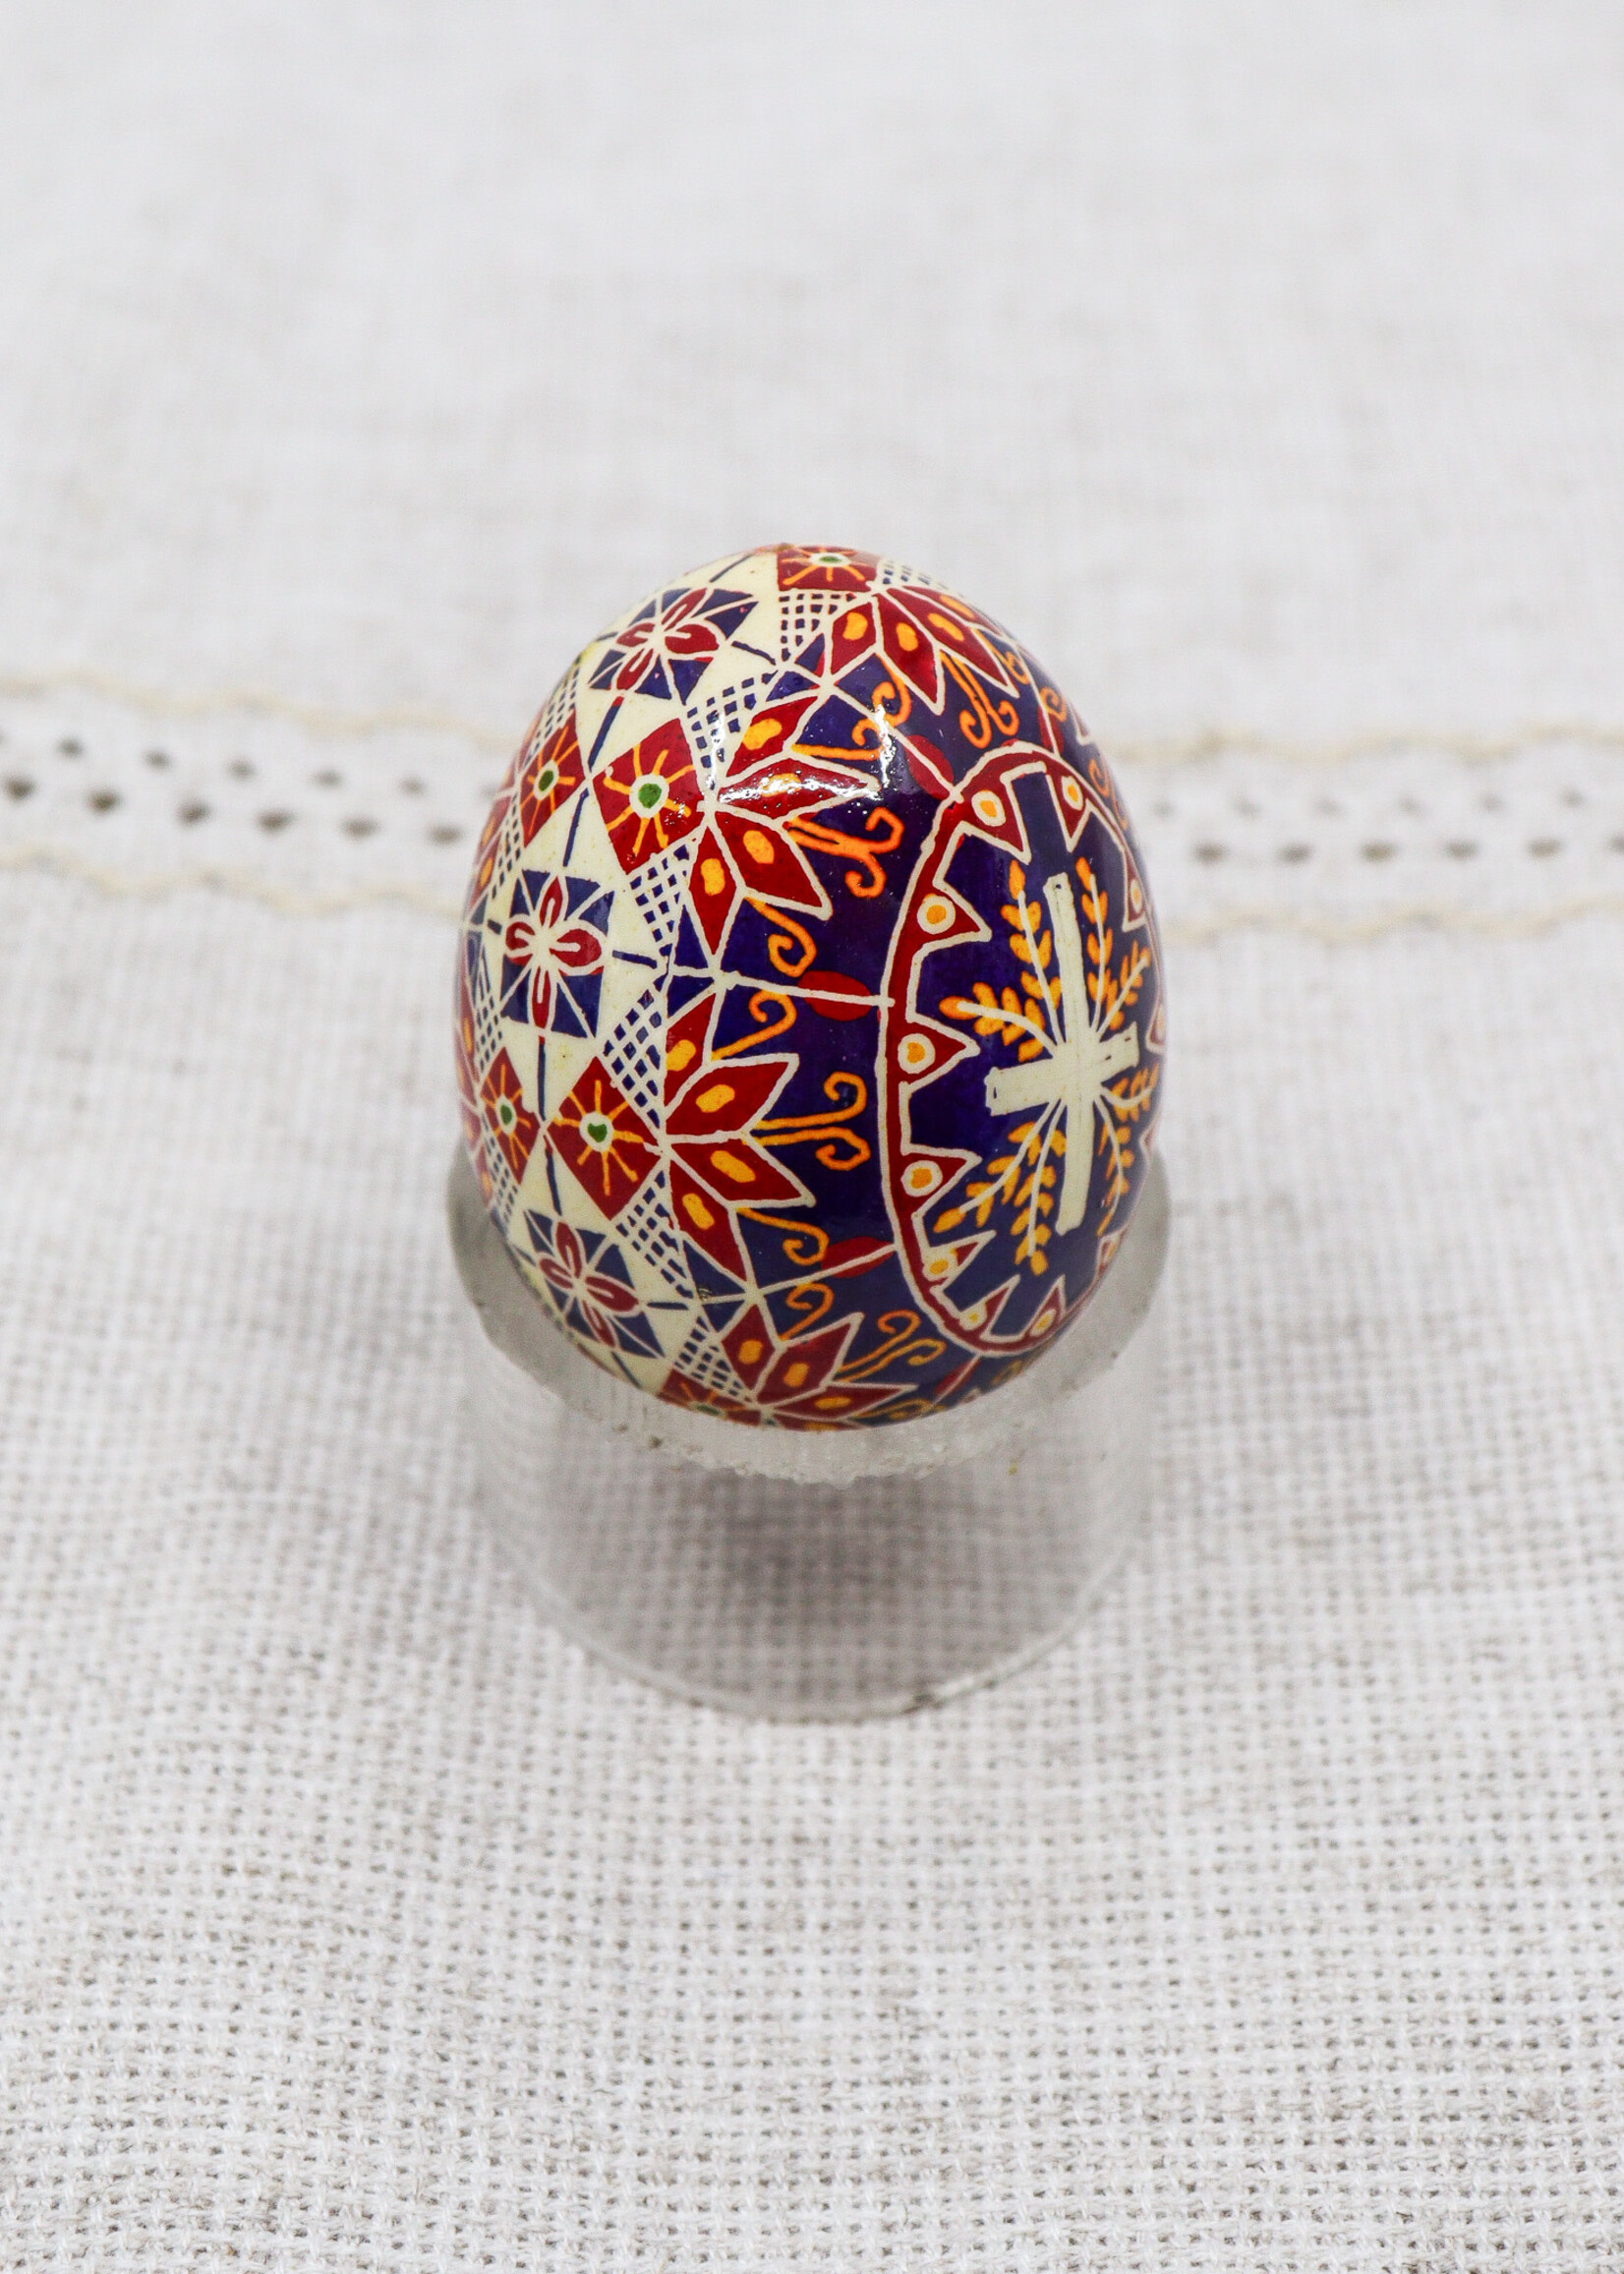 PYSANKA -  Ukrainian style handmade decorated eggs